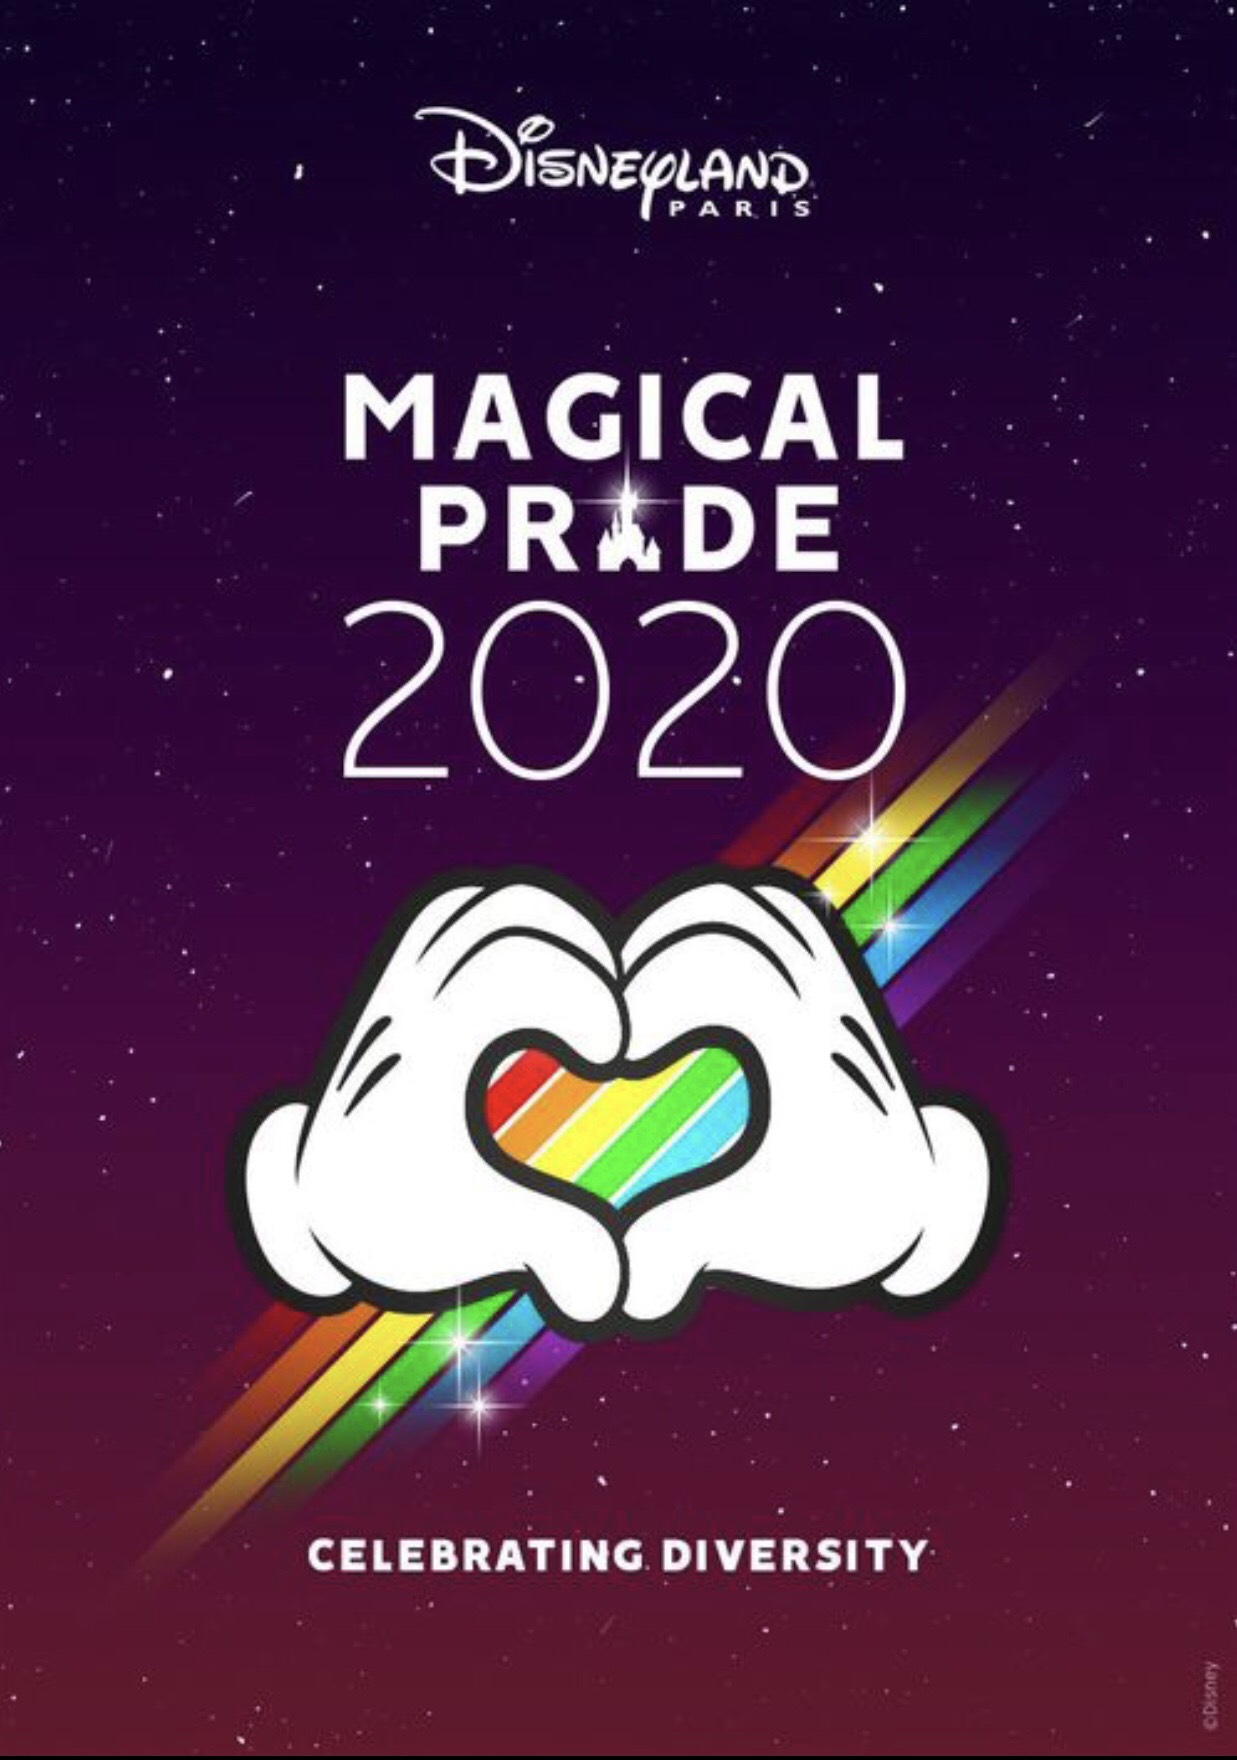 Magical Pride Returning to Disneyland Paris in 2020!